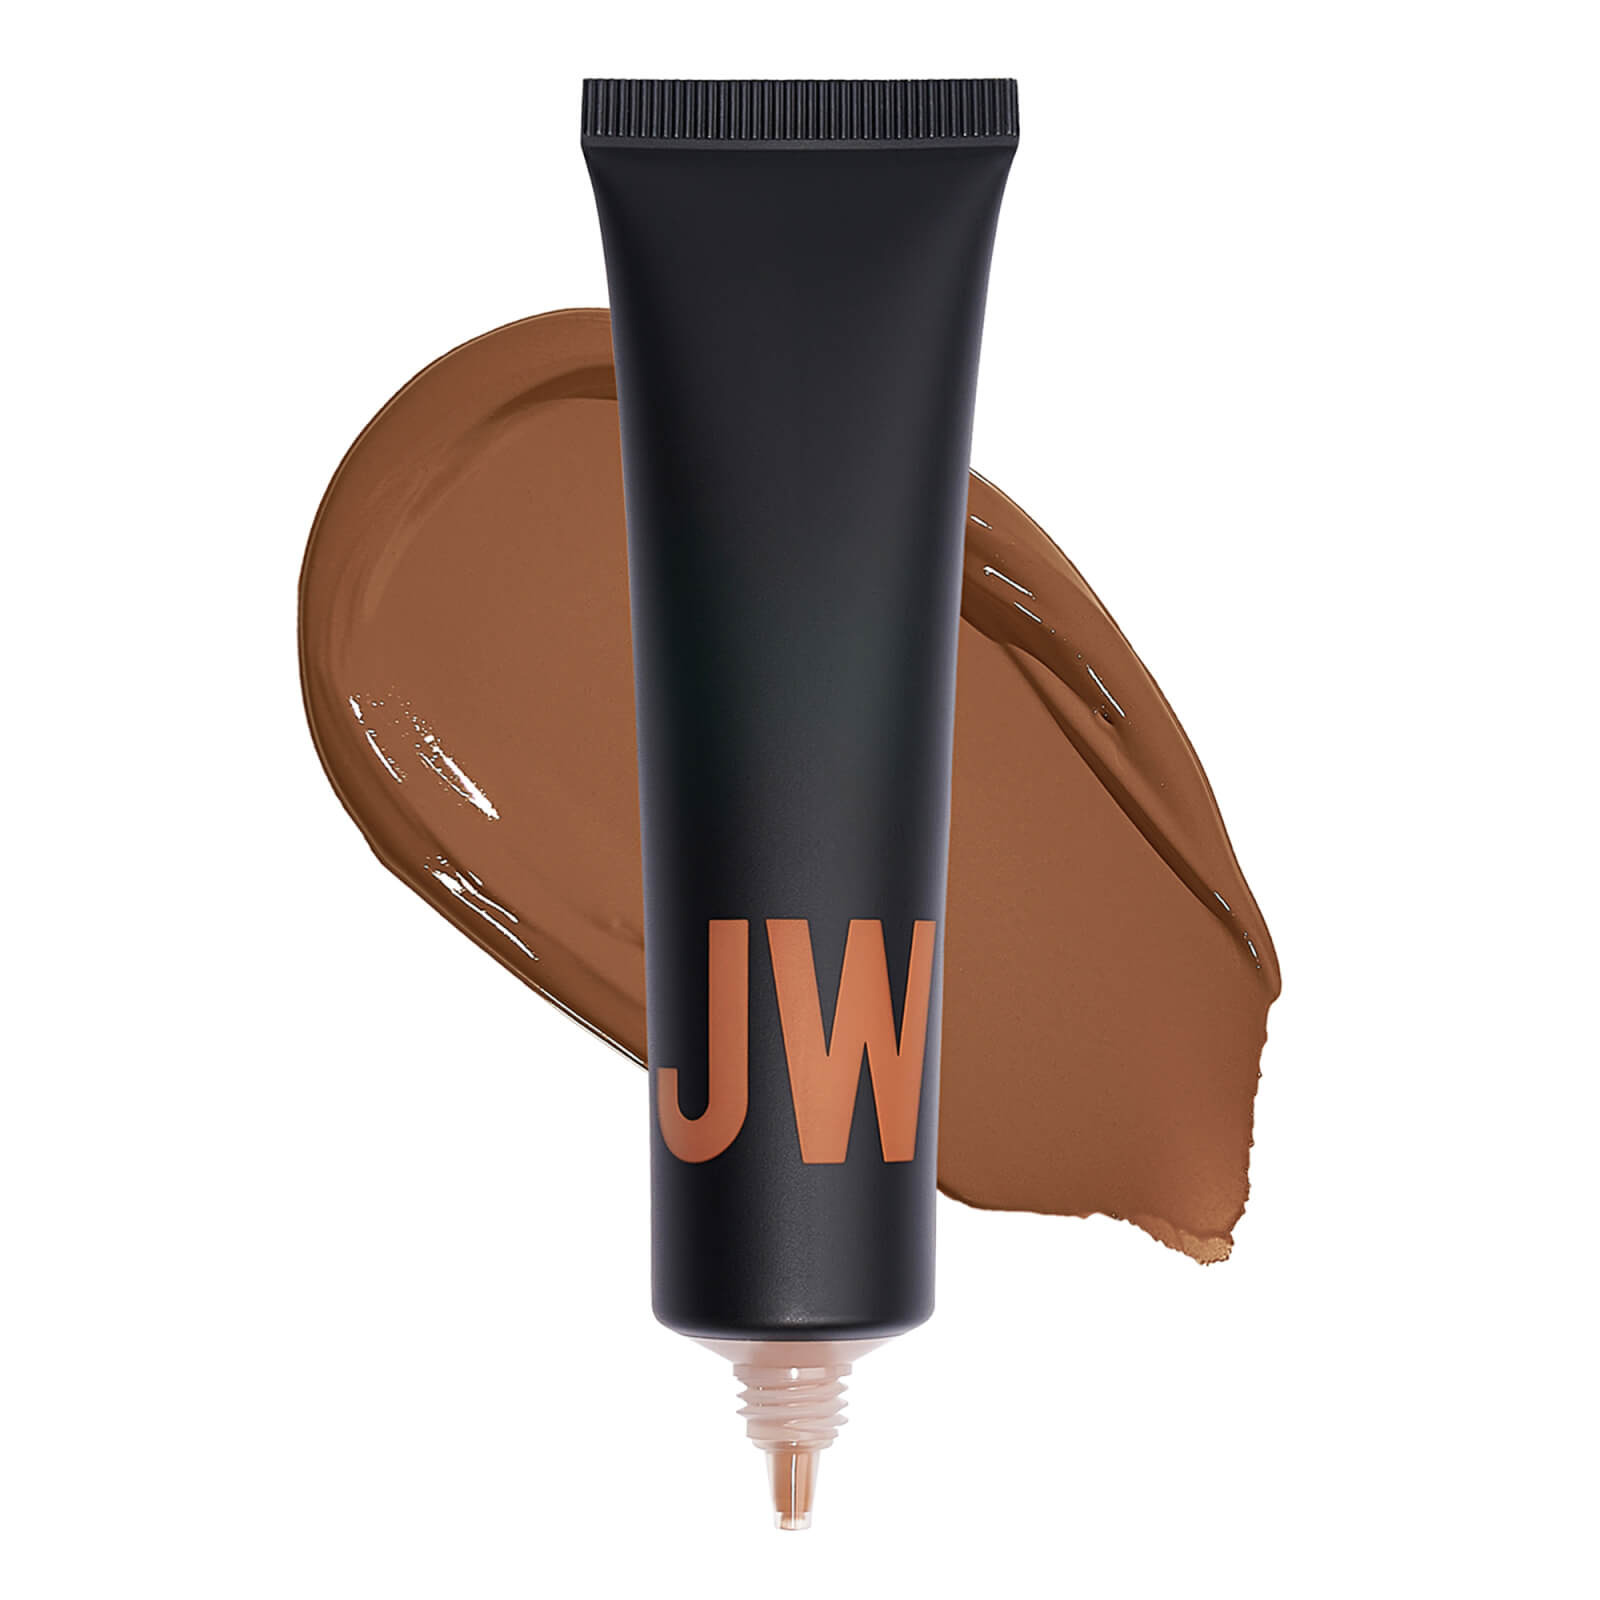 Jason Wu Beauty Tinted Moisturizer Meets Cc Cream 30ml (various Shades) - Skin 9